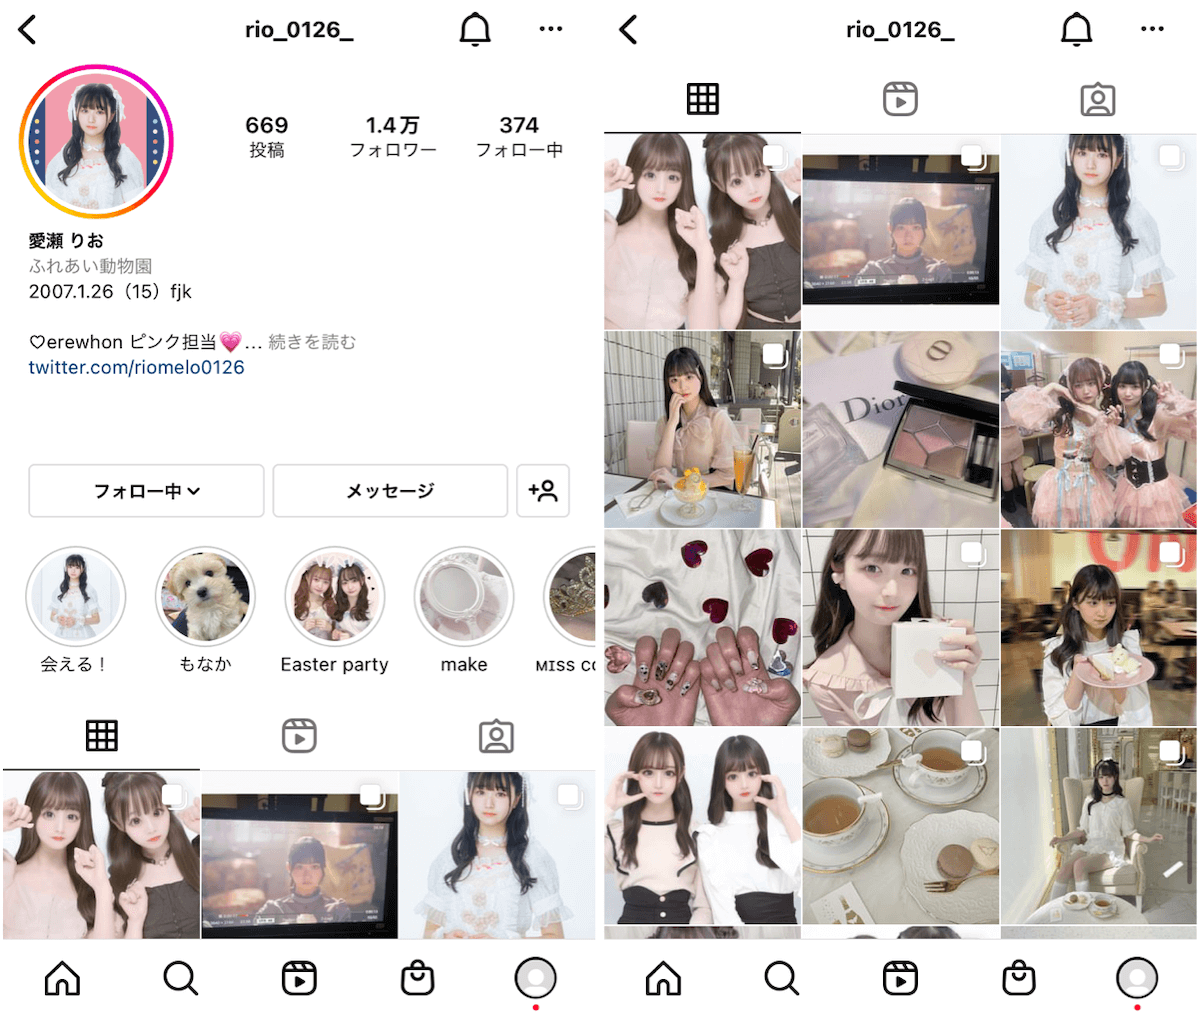 Instagram-high-school-cosmetic- rio_0126_